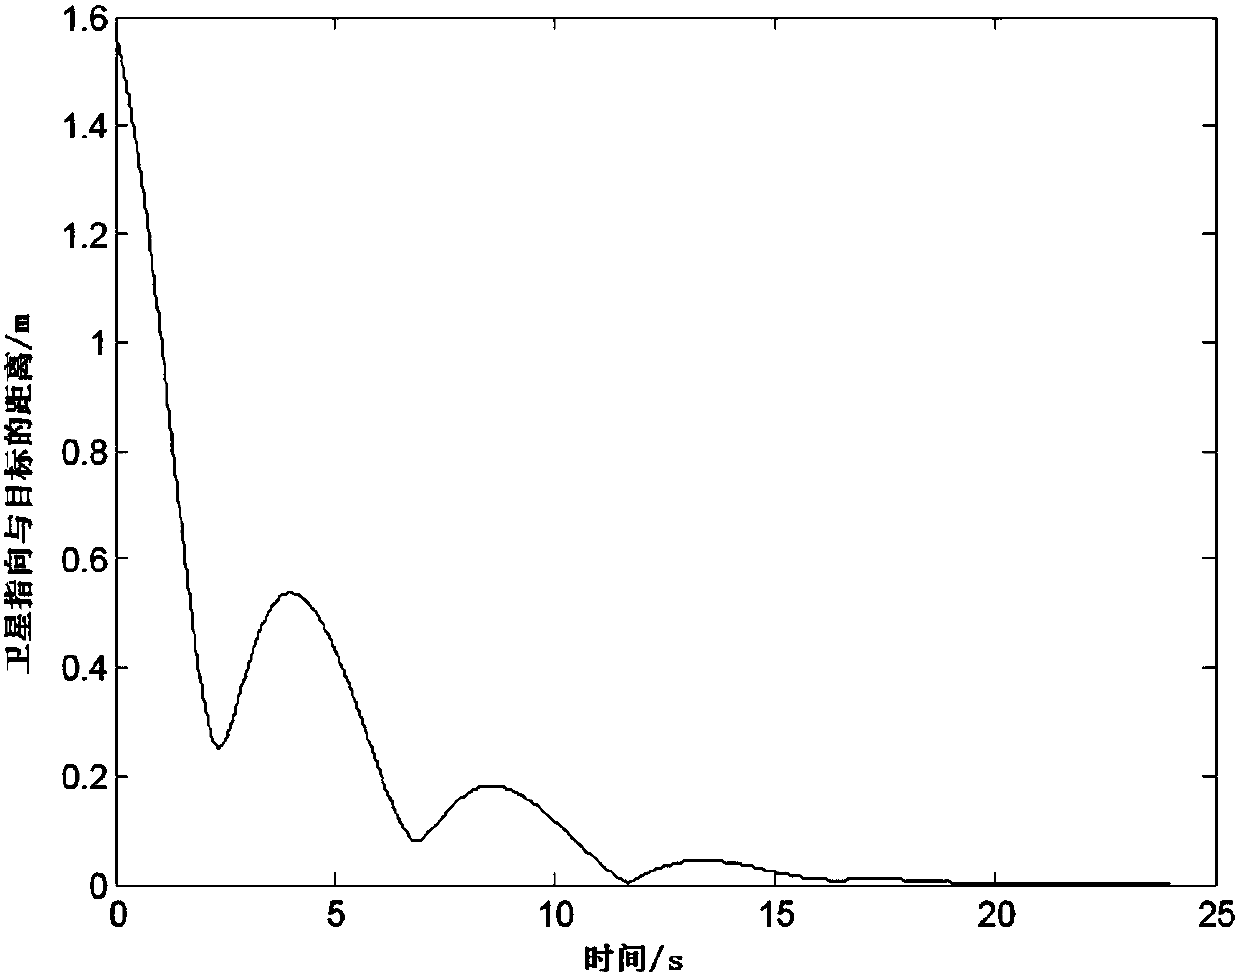 Numerical Simulation Method of Satellite Attitude Based on Lie Group Spectrum Algorithm